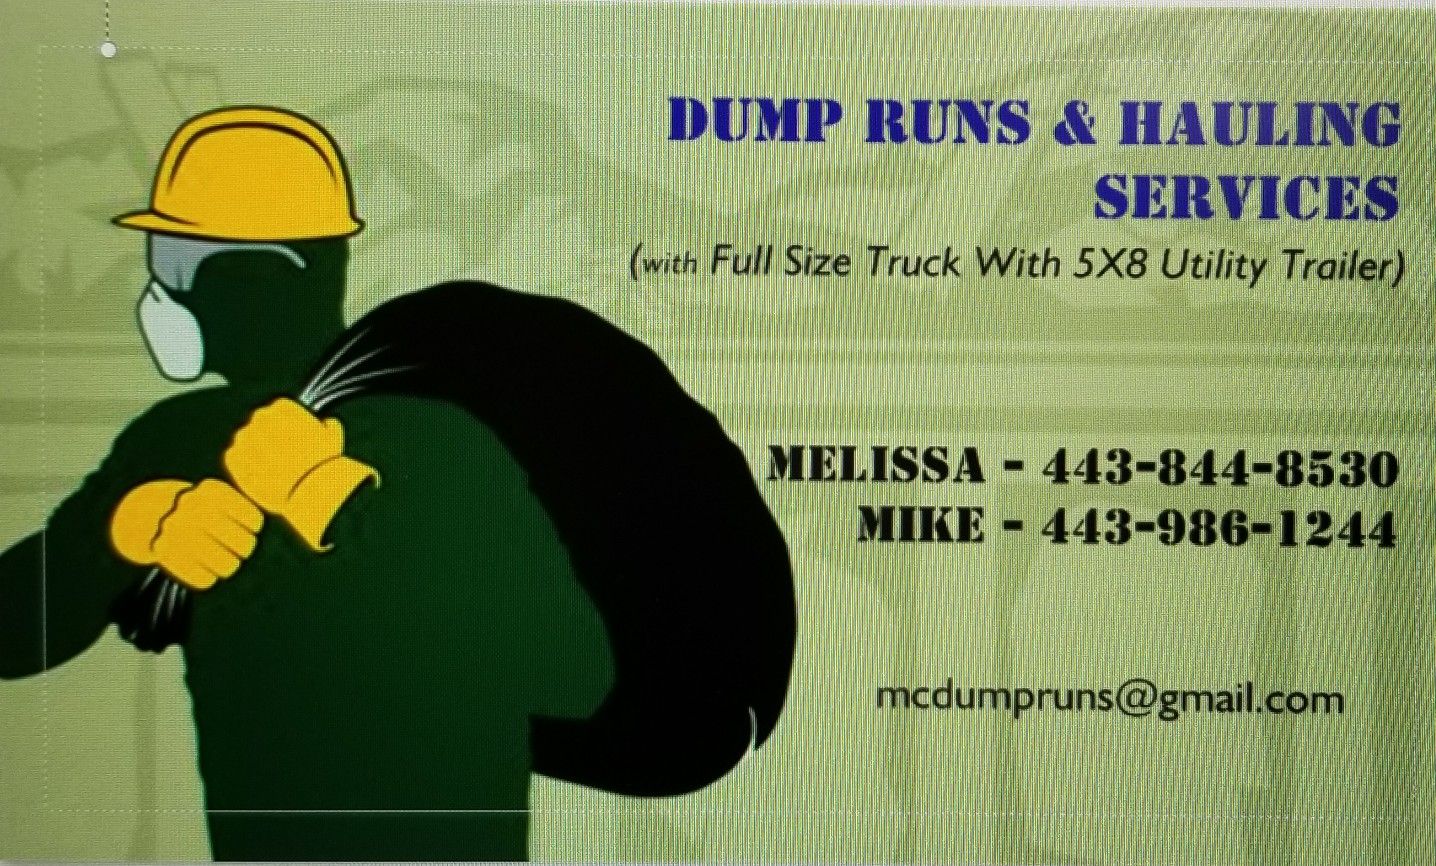 Dump Runs and hauling services.